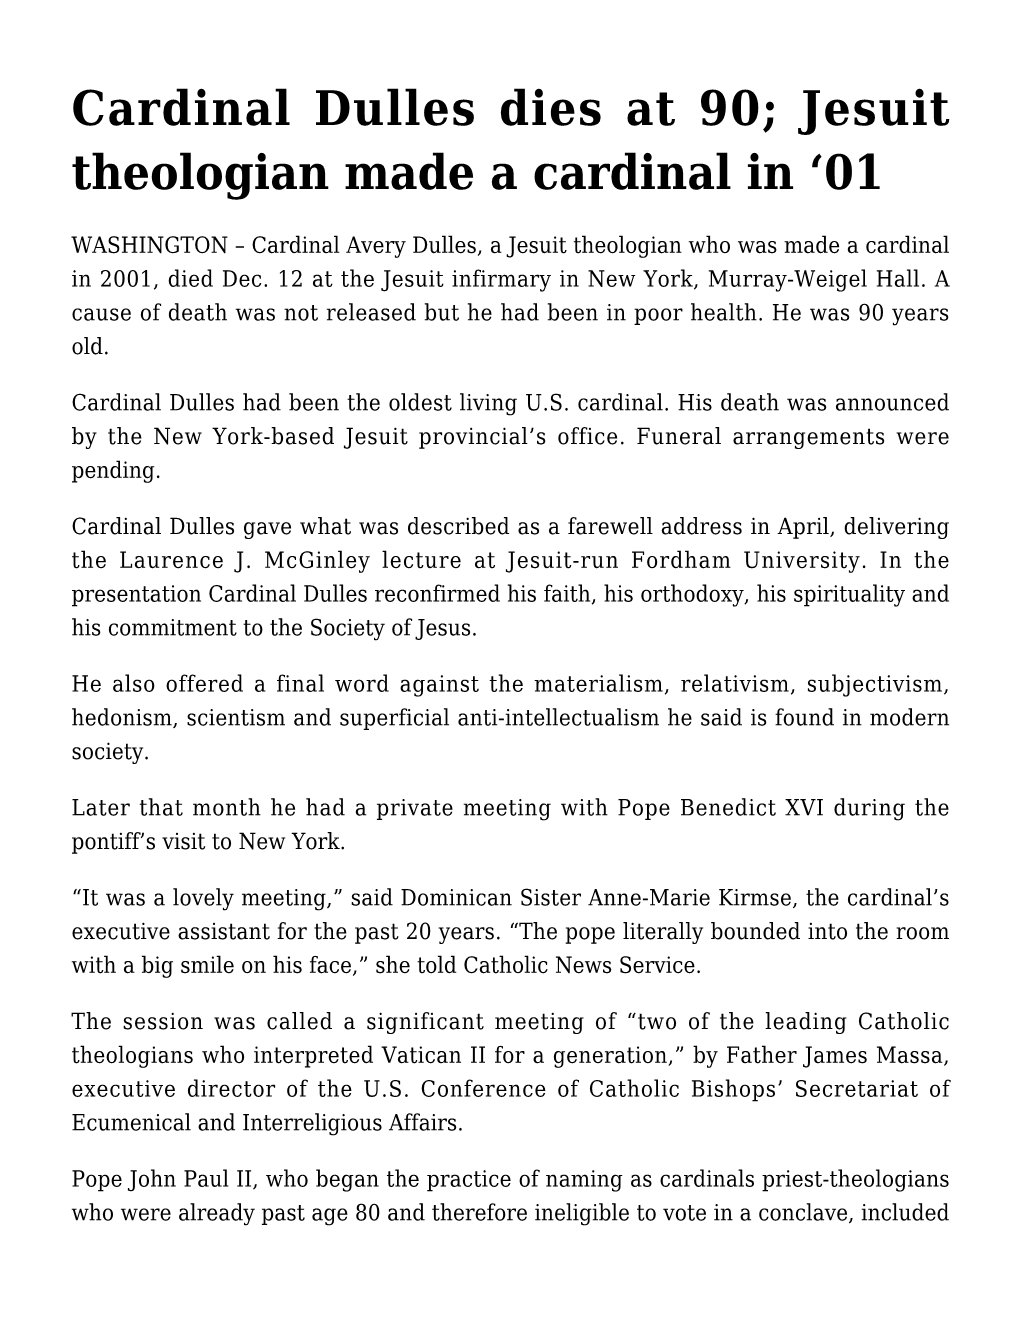 Cardinal Dulles Dies at 90; Jesuit Theologian Made a Cardinal in ‘01